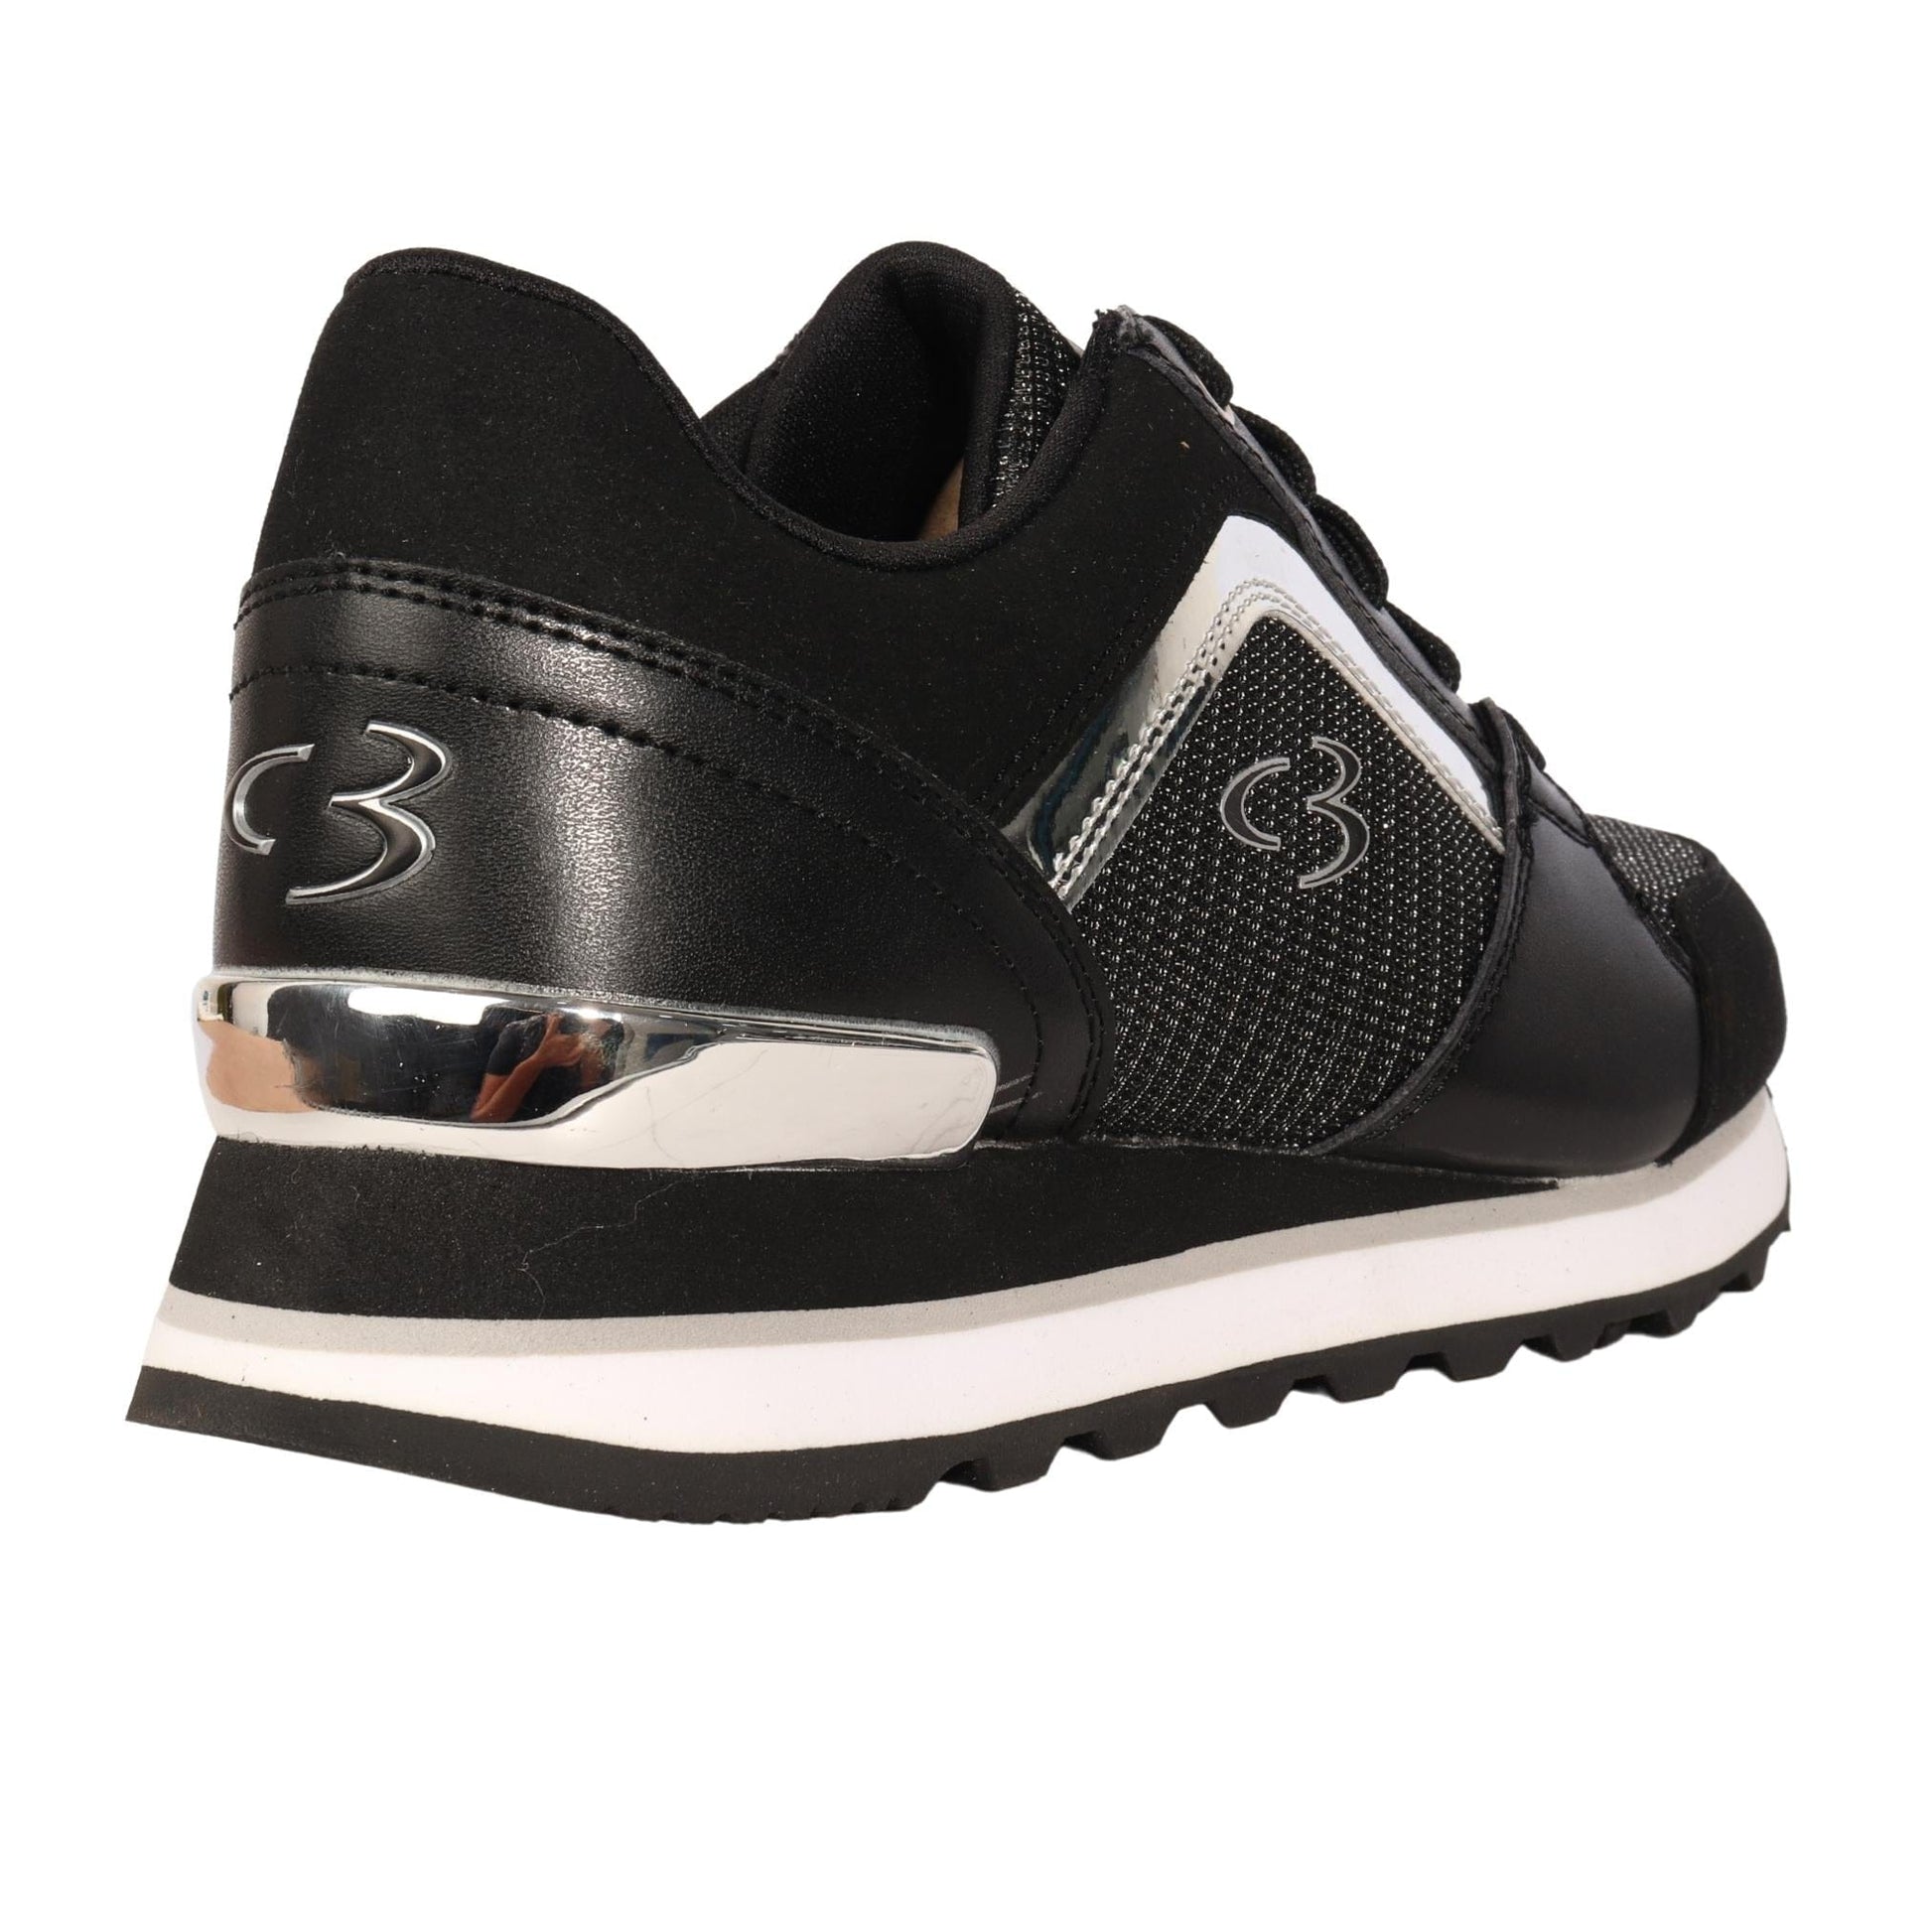 SKECHERS Womens Shoes 35.5 / Black SKECHERS - Concept 3 Lace-up Fashion Sneaker